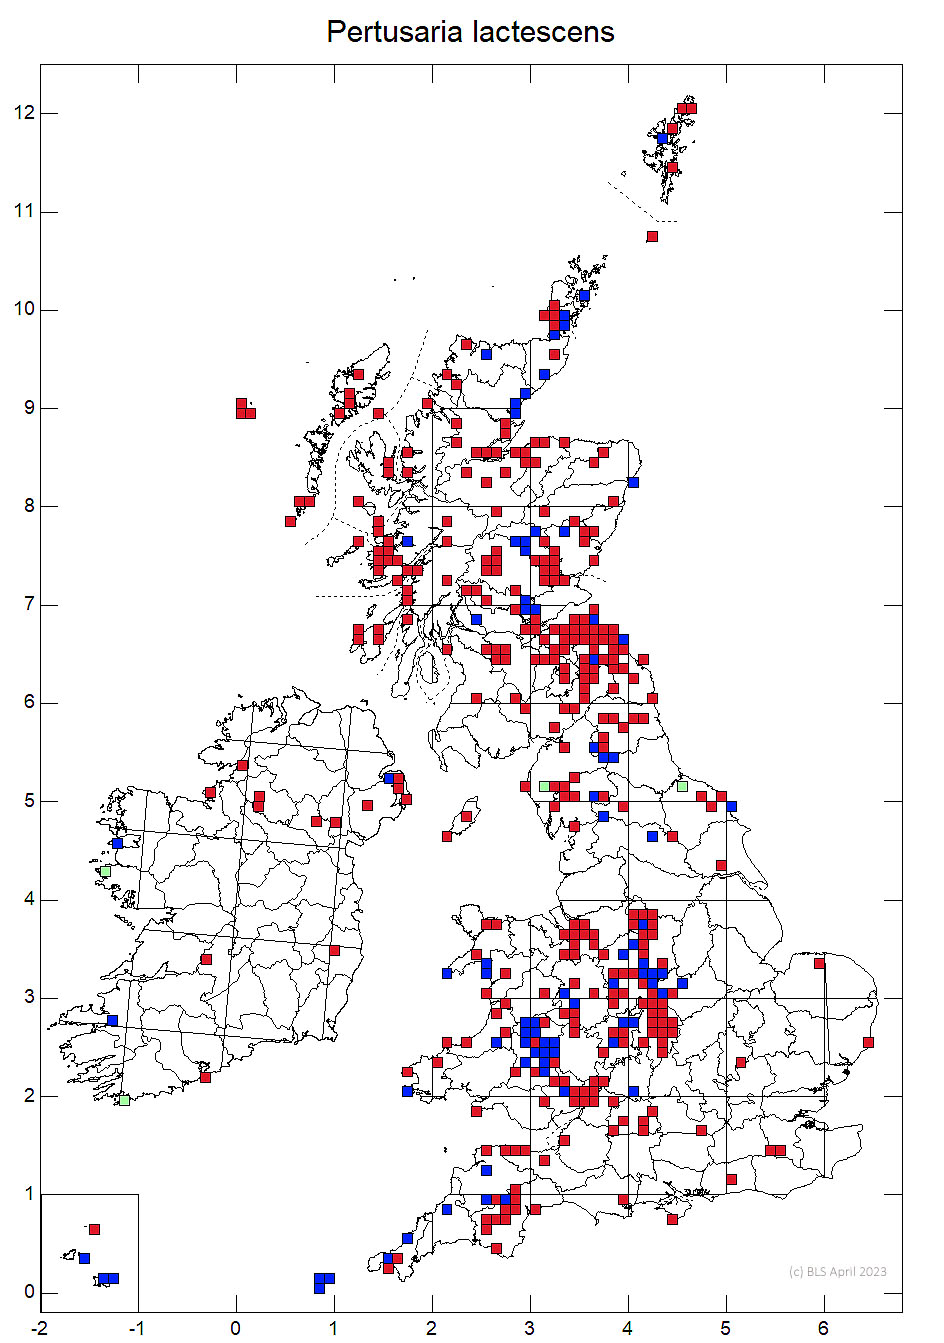 Pertusaria lactescens 10km sq distribution map